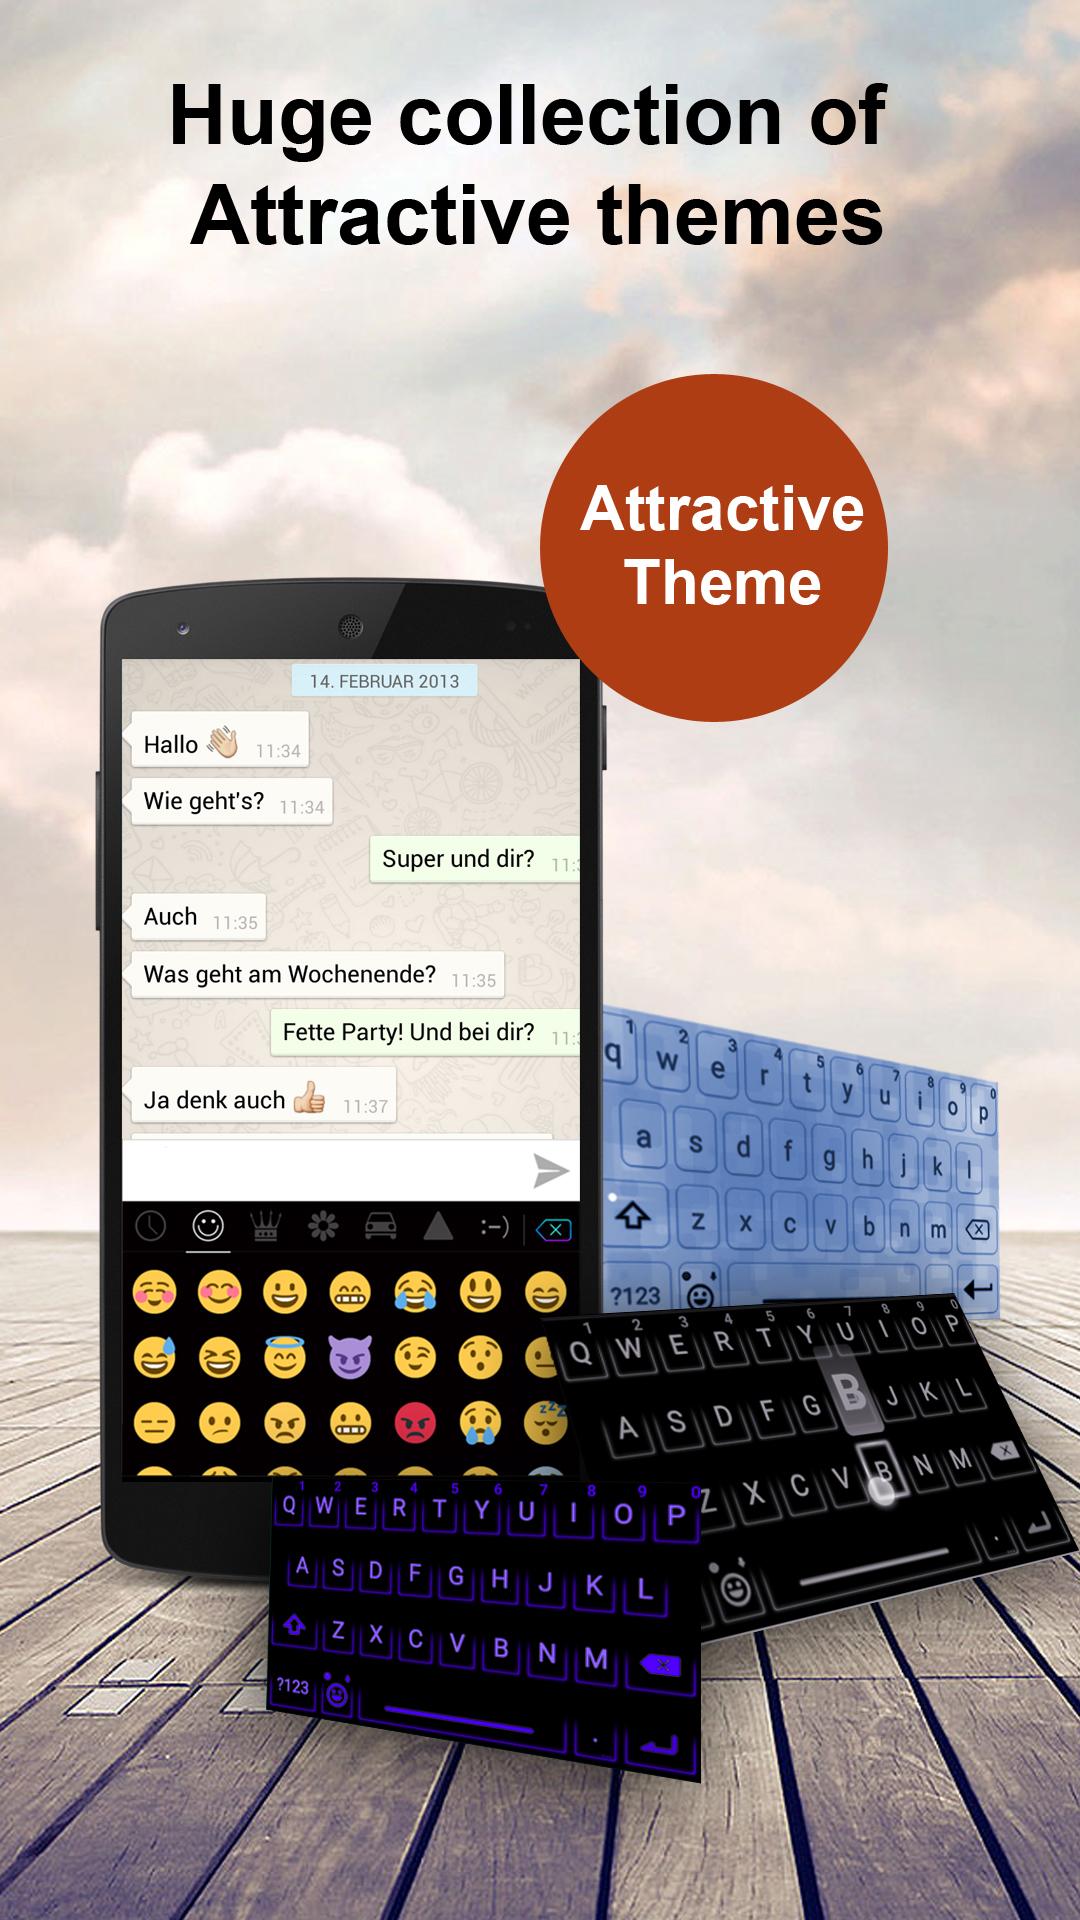 Android application Emoji Keyboard screenshort